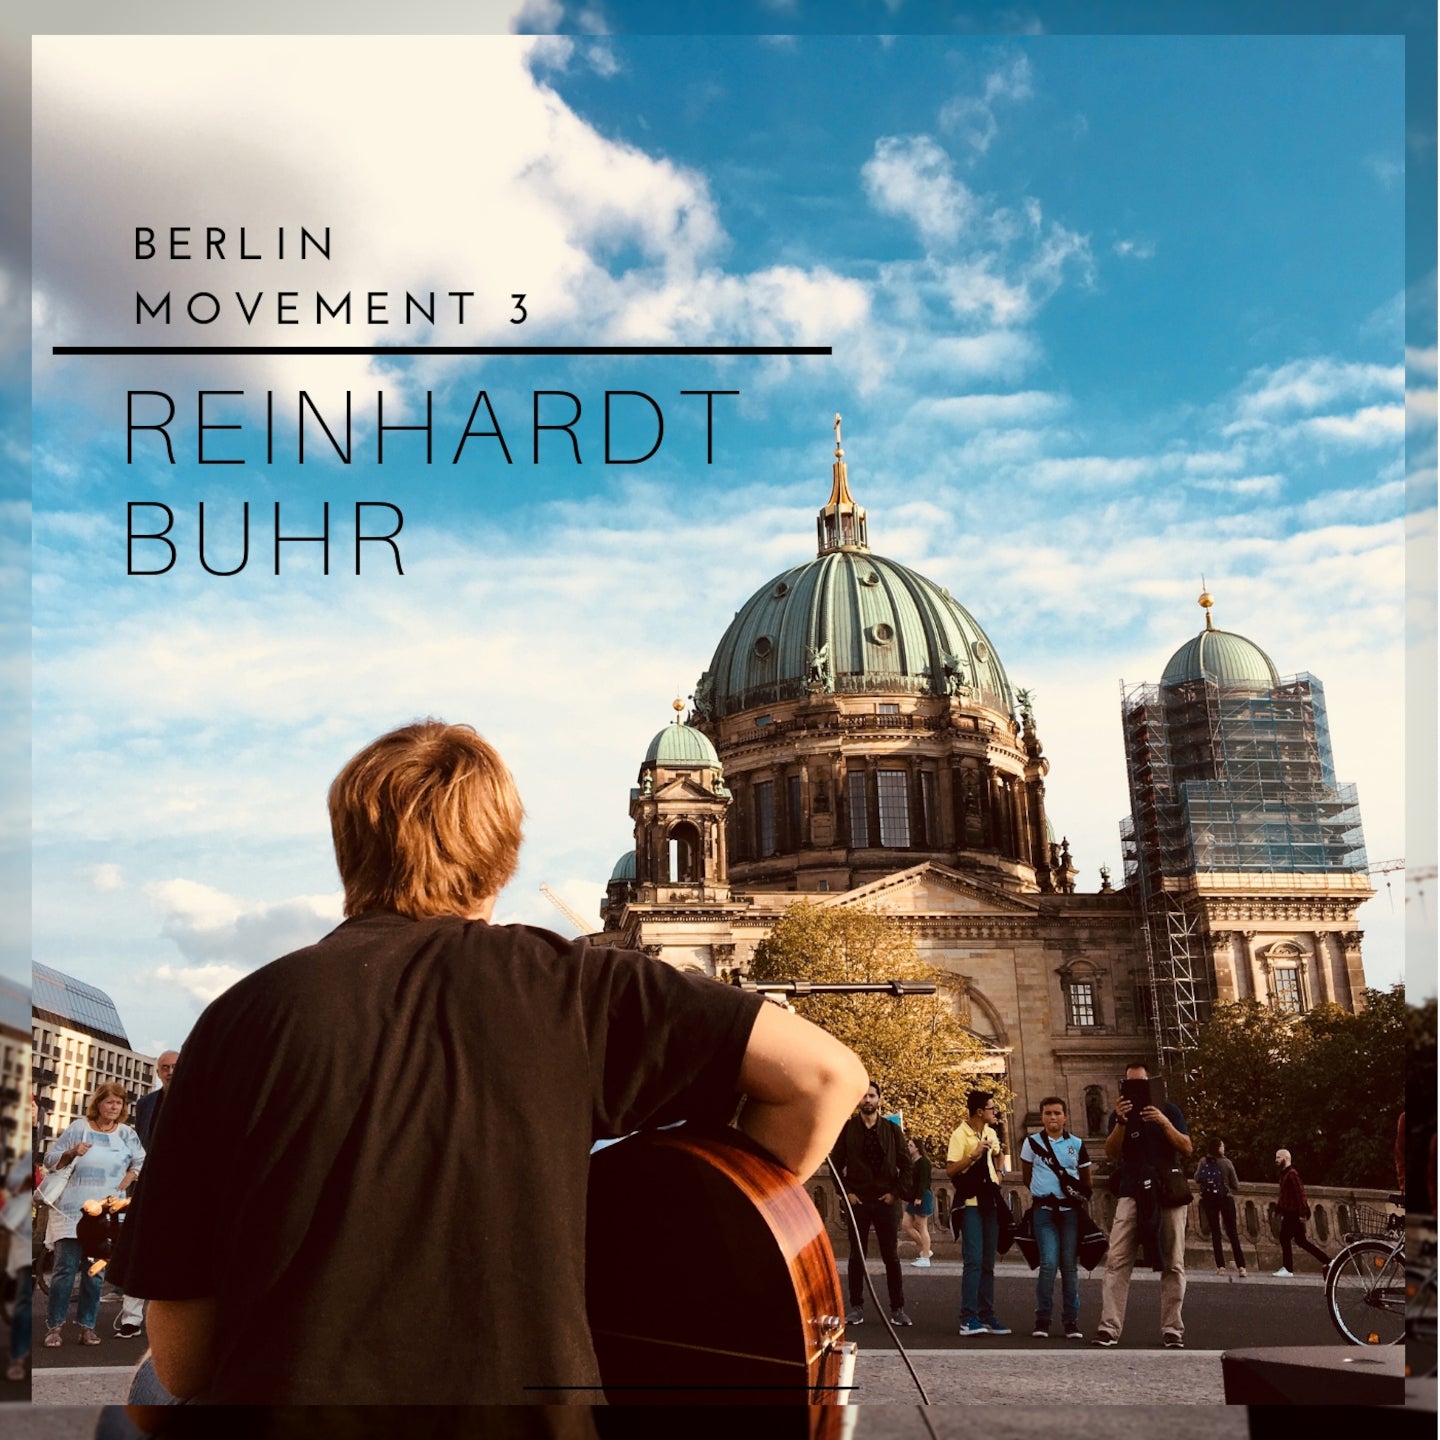 Reinhardt Buhr   Movement 3   Berlin   02 Sea of Glass